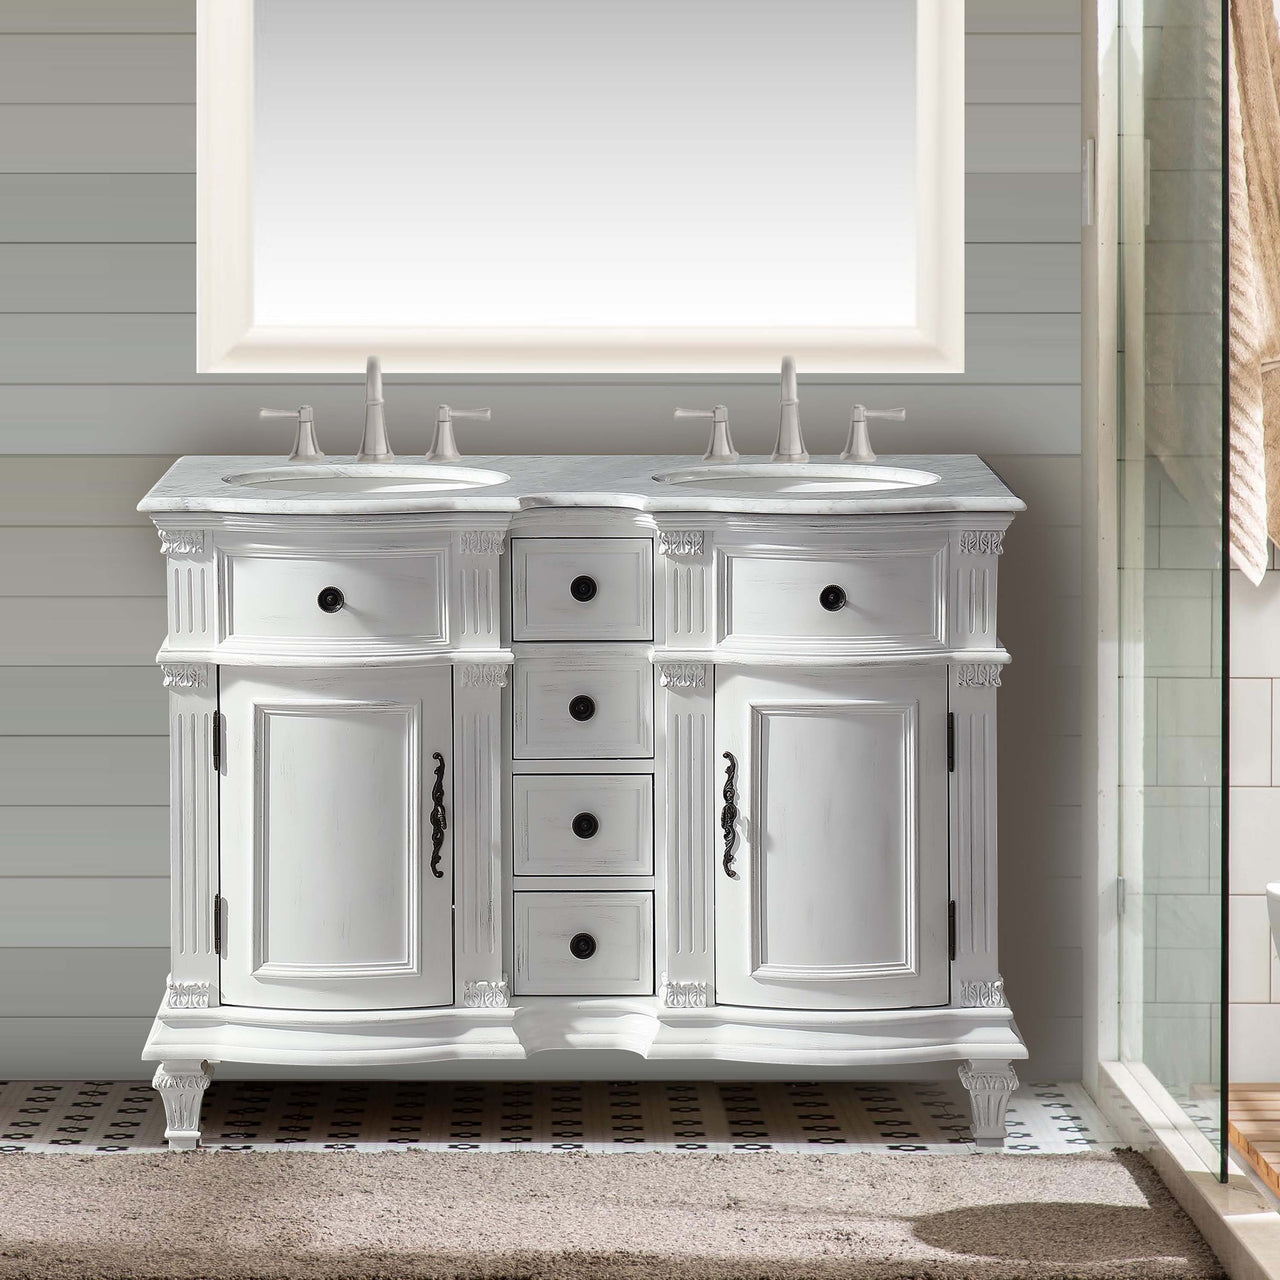 SilkRoad 48" Double Sink Cabinet - Carrara White Top, Undermount White Ceramic Sinks (3-hole)